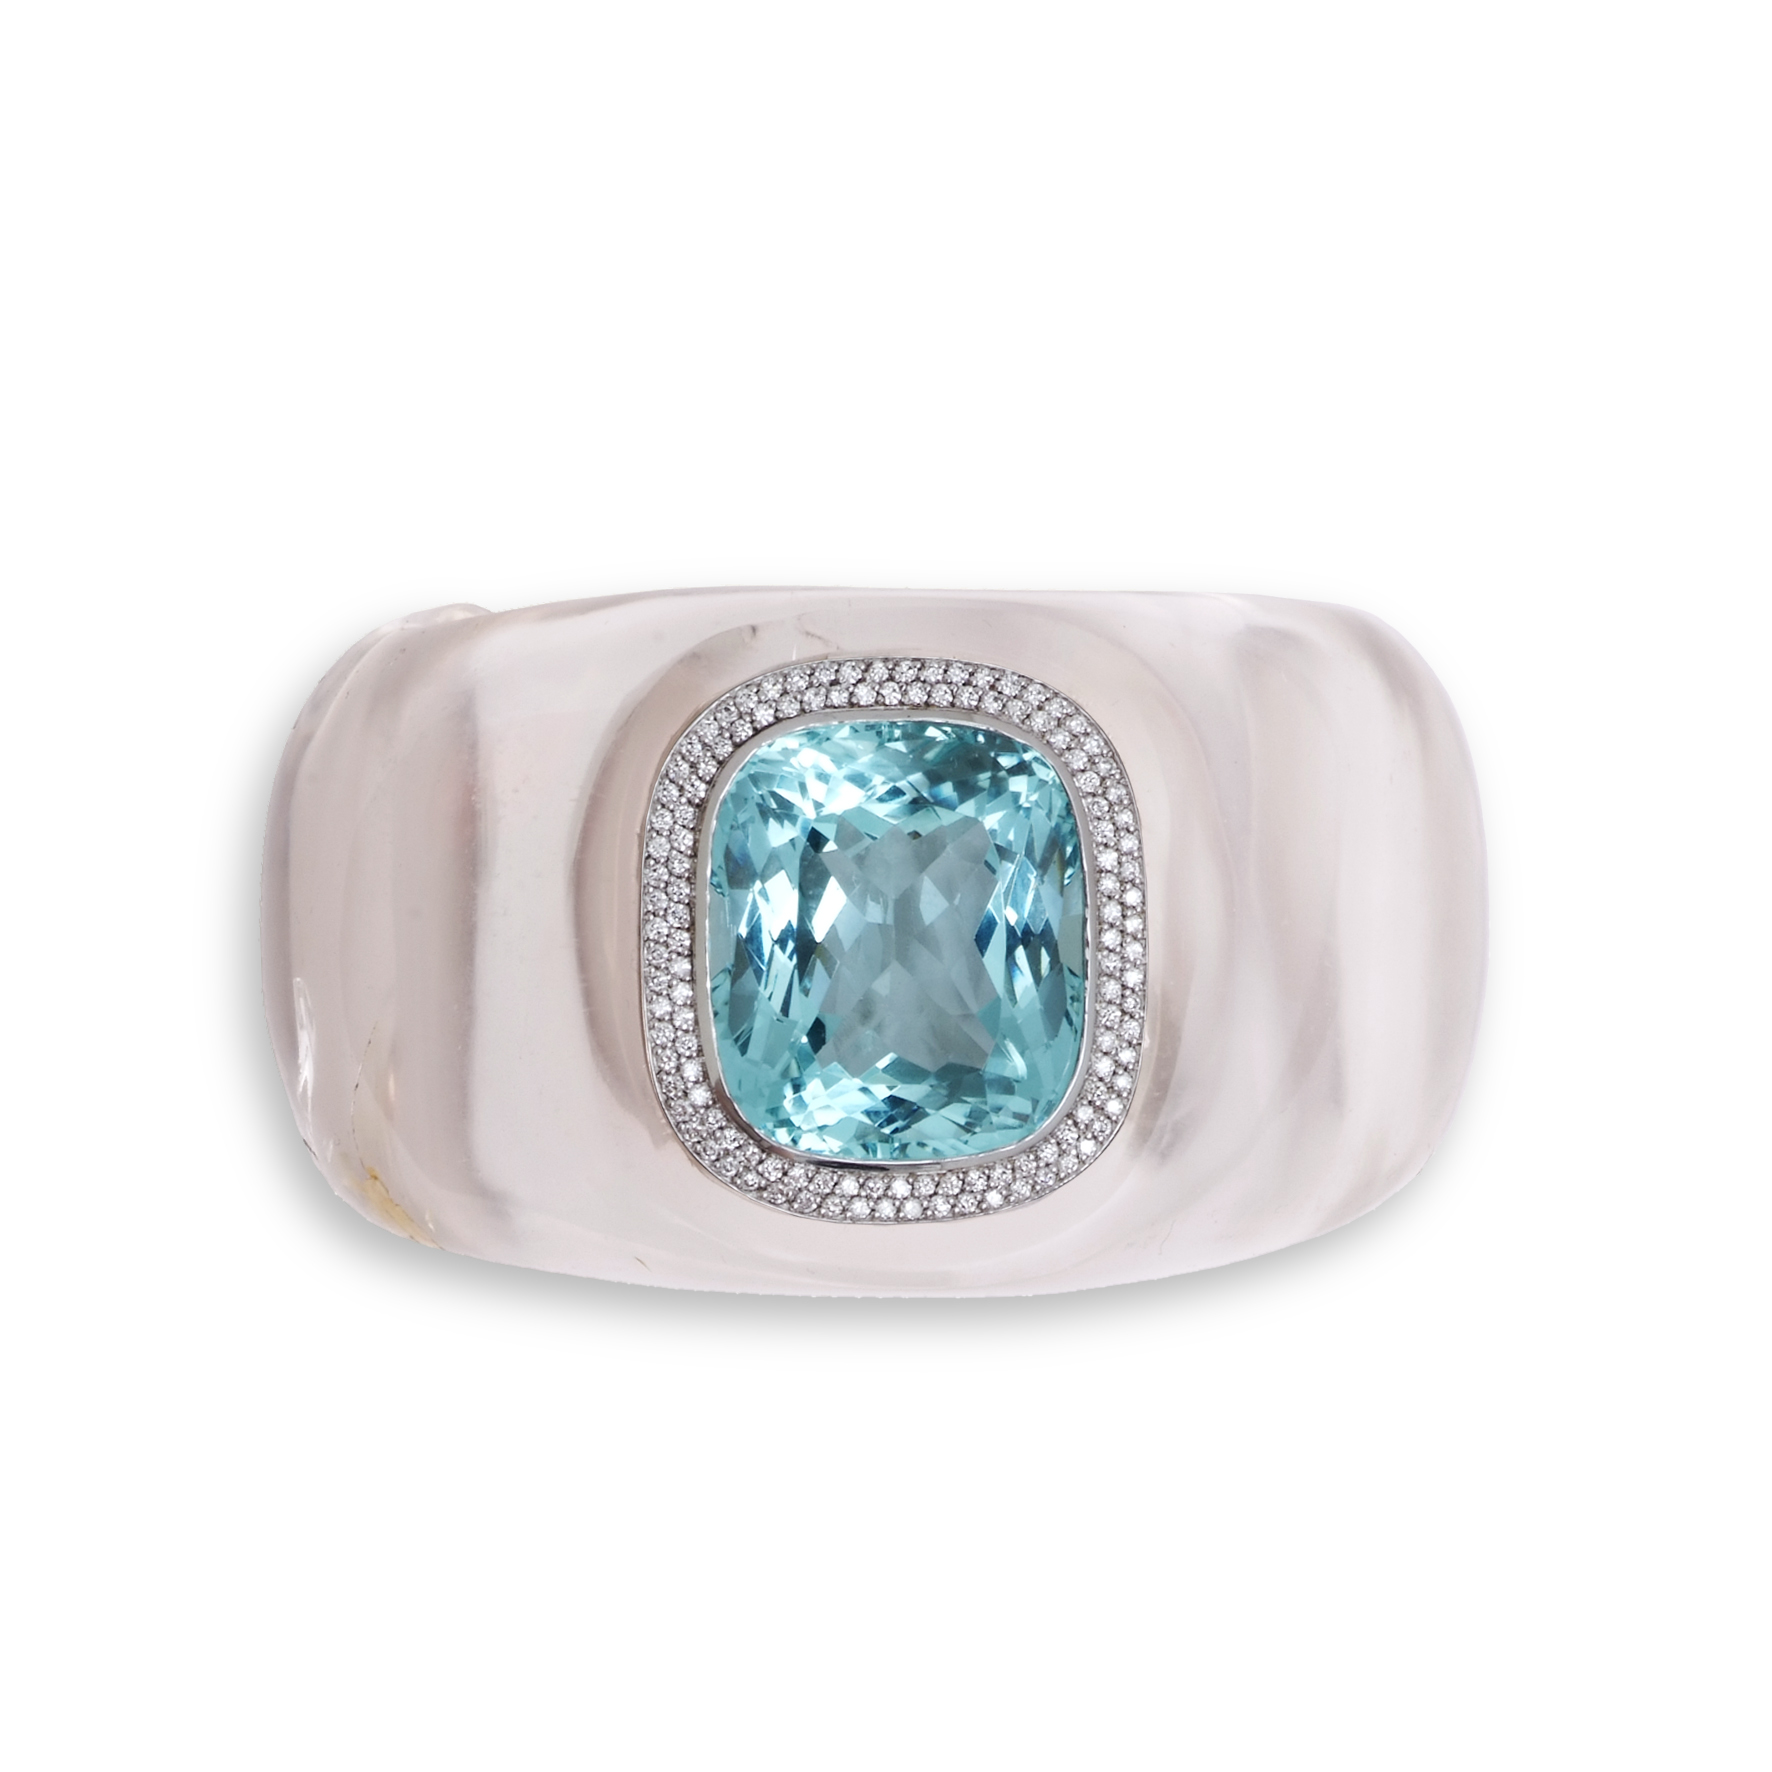 Rock-crystal-and-aquamarine-cuff-bangle.jpg